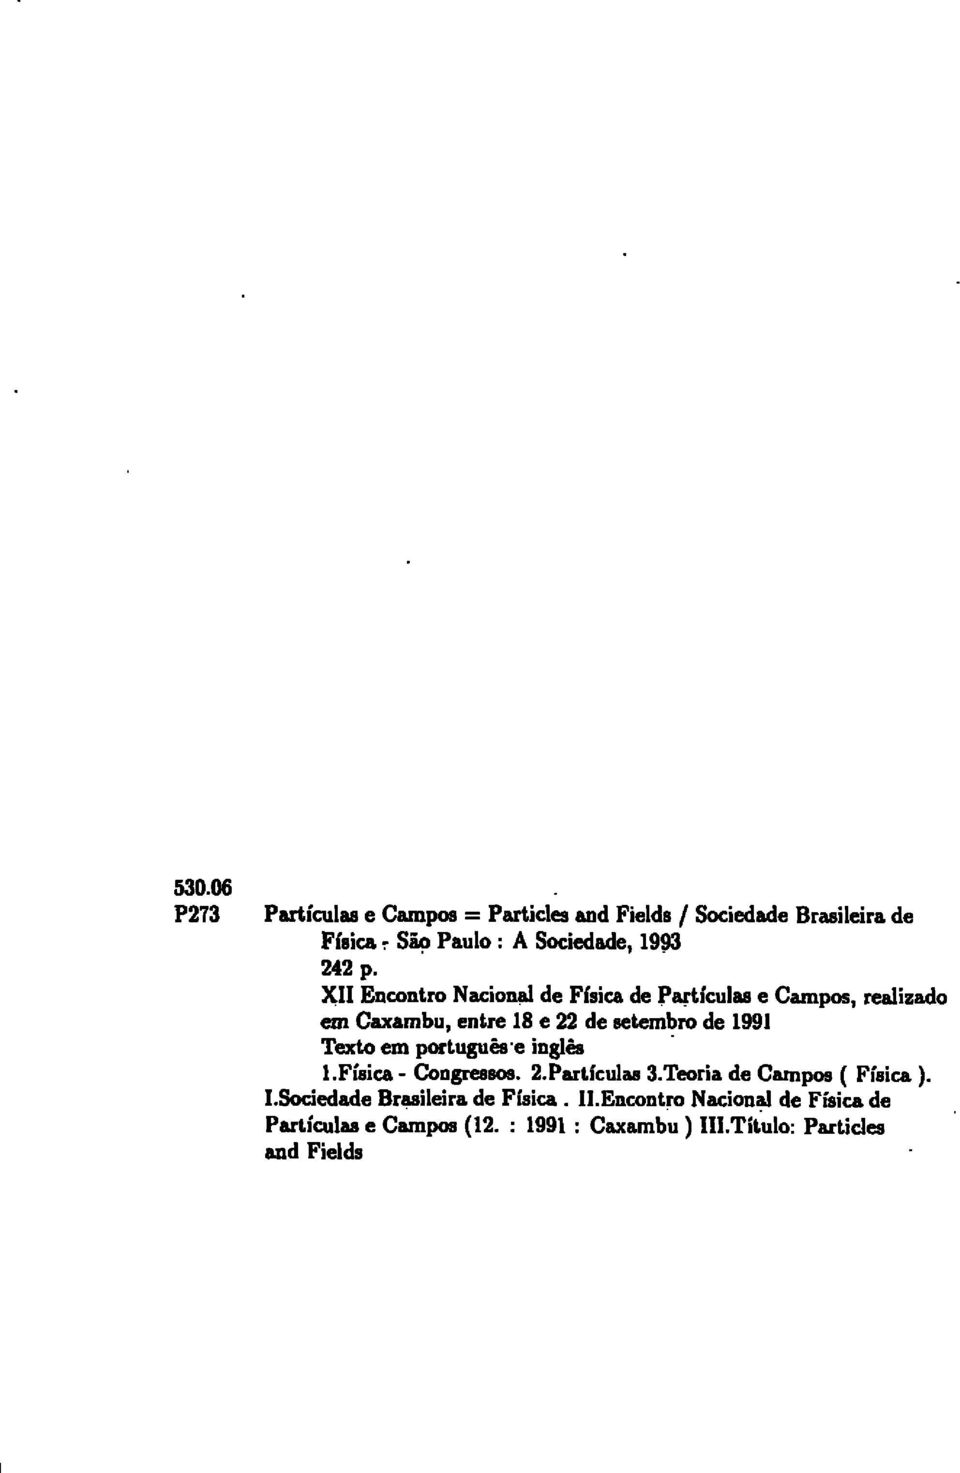 XII Encontro Nacional de Física de Partículas e Campos, realizado em Caxambu, entre 18 e 22 de setembro de 1991 Texto